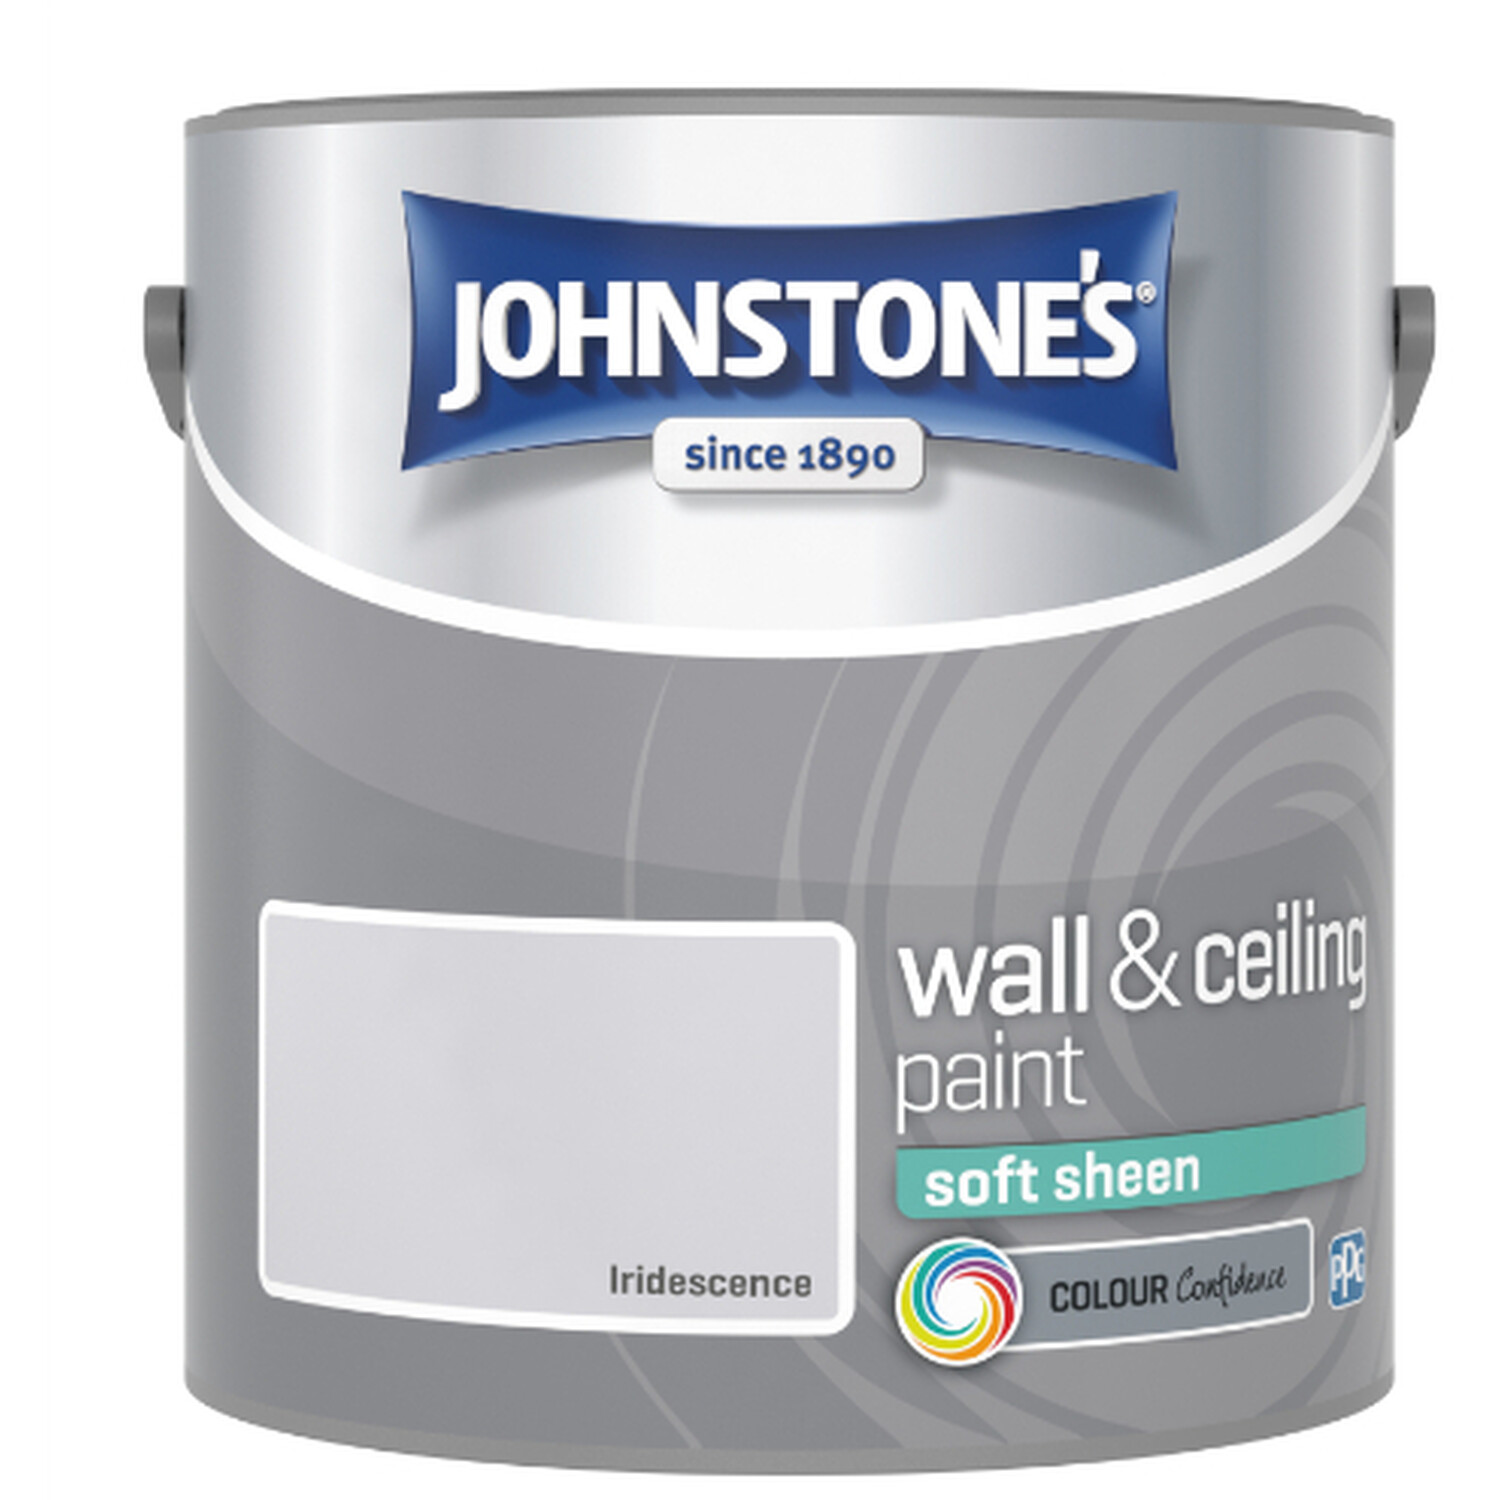 Johnstones Soft Sheen Emulsion Paint - Iridescence / 2.5l Image 2